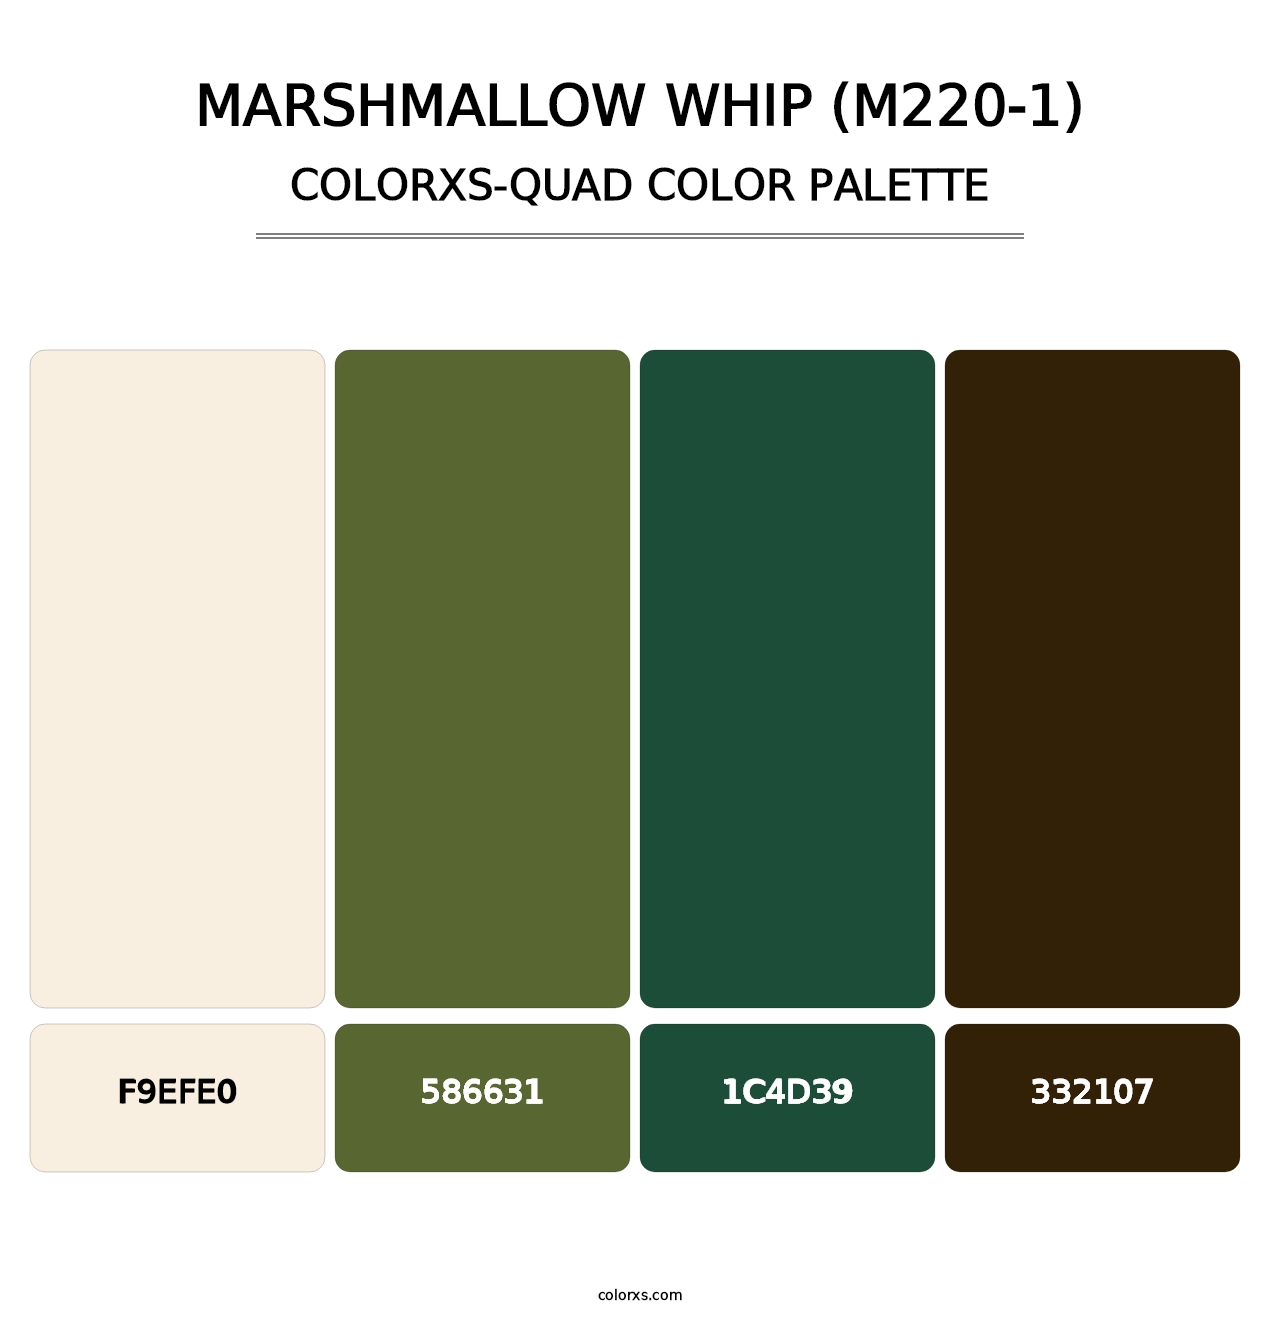 Marshmallow Whip (M220-1) - Colorxs Quad Palette